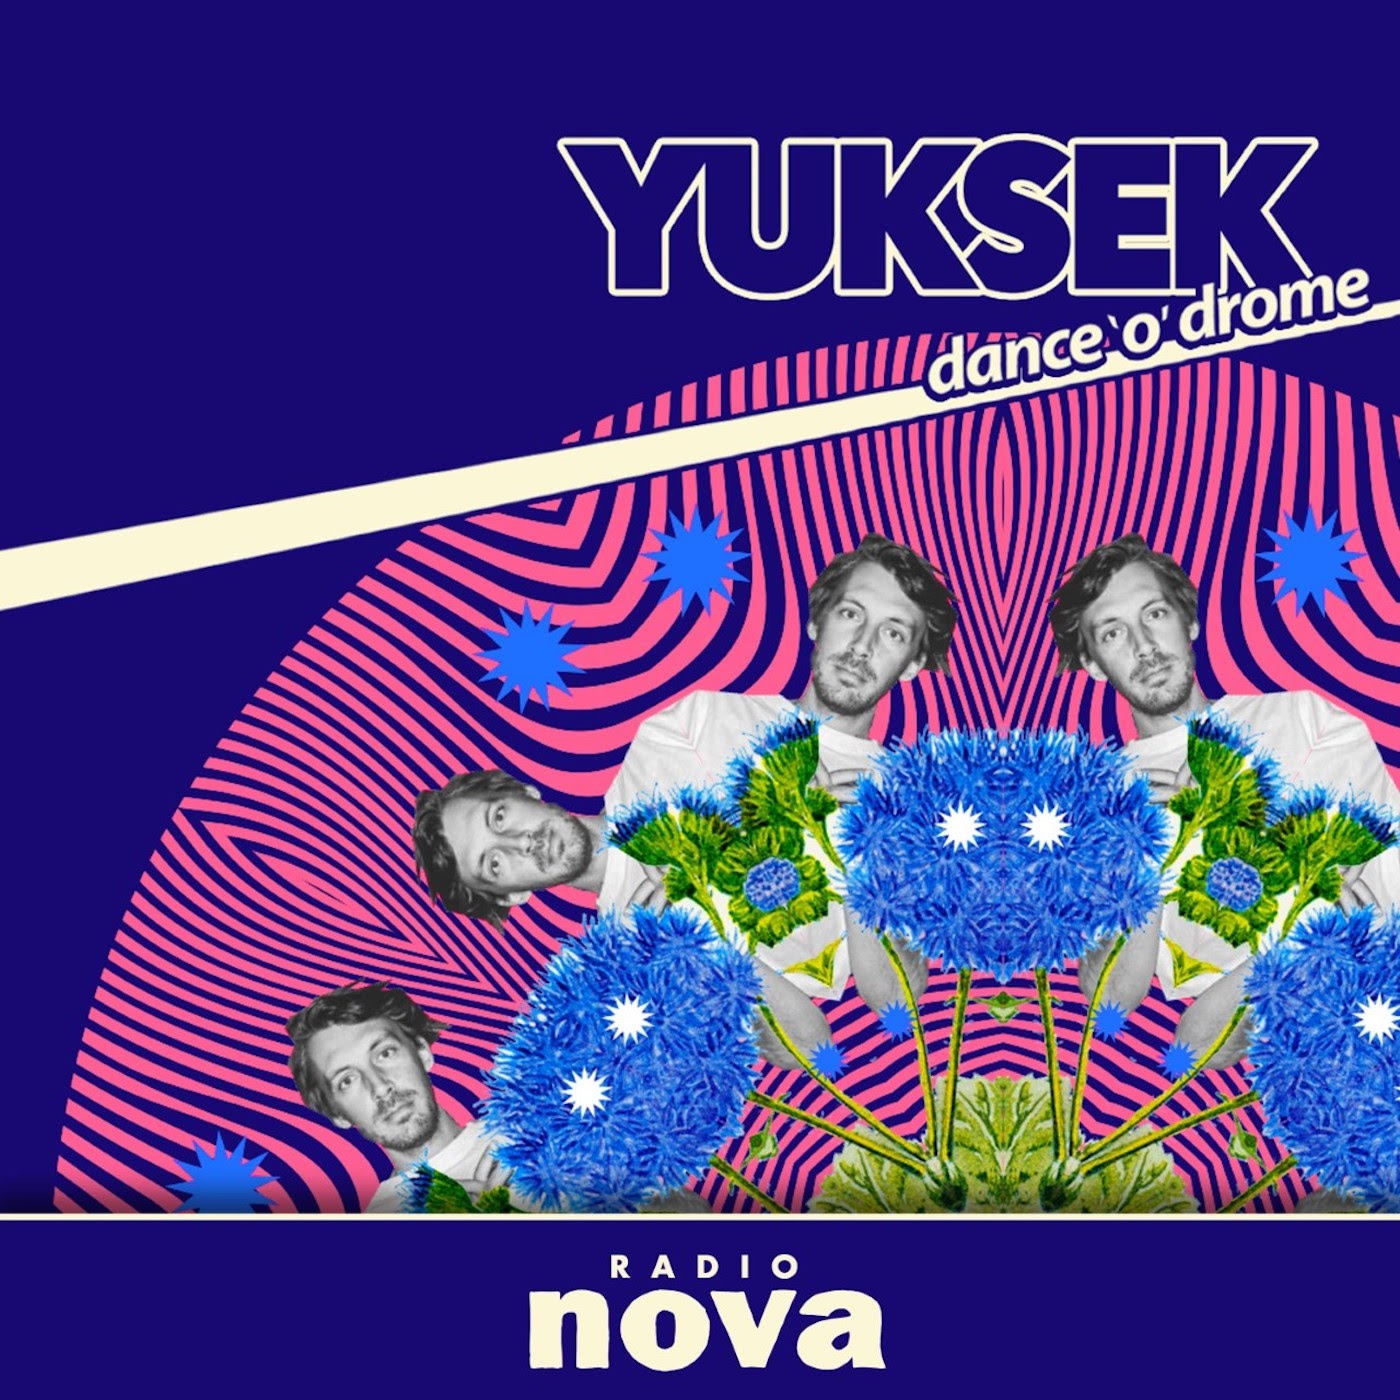 « Dance’o’drome » #17 : le mix de Yuksek, avec Mo Laudi, sur Radio Nova